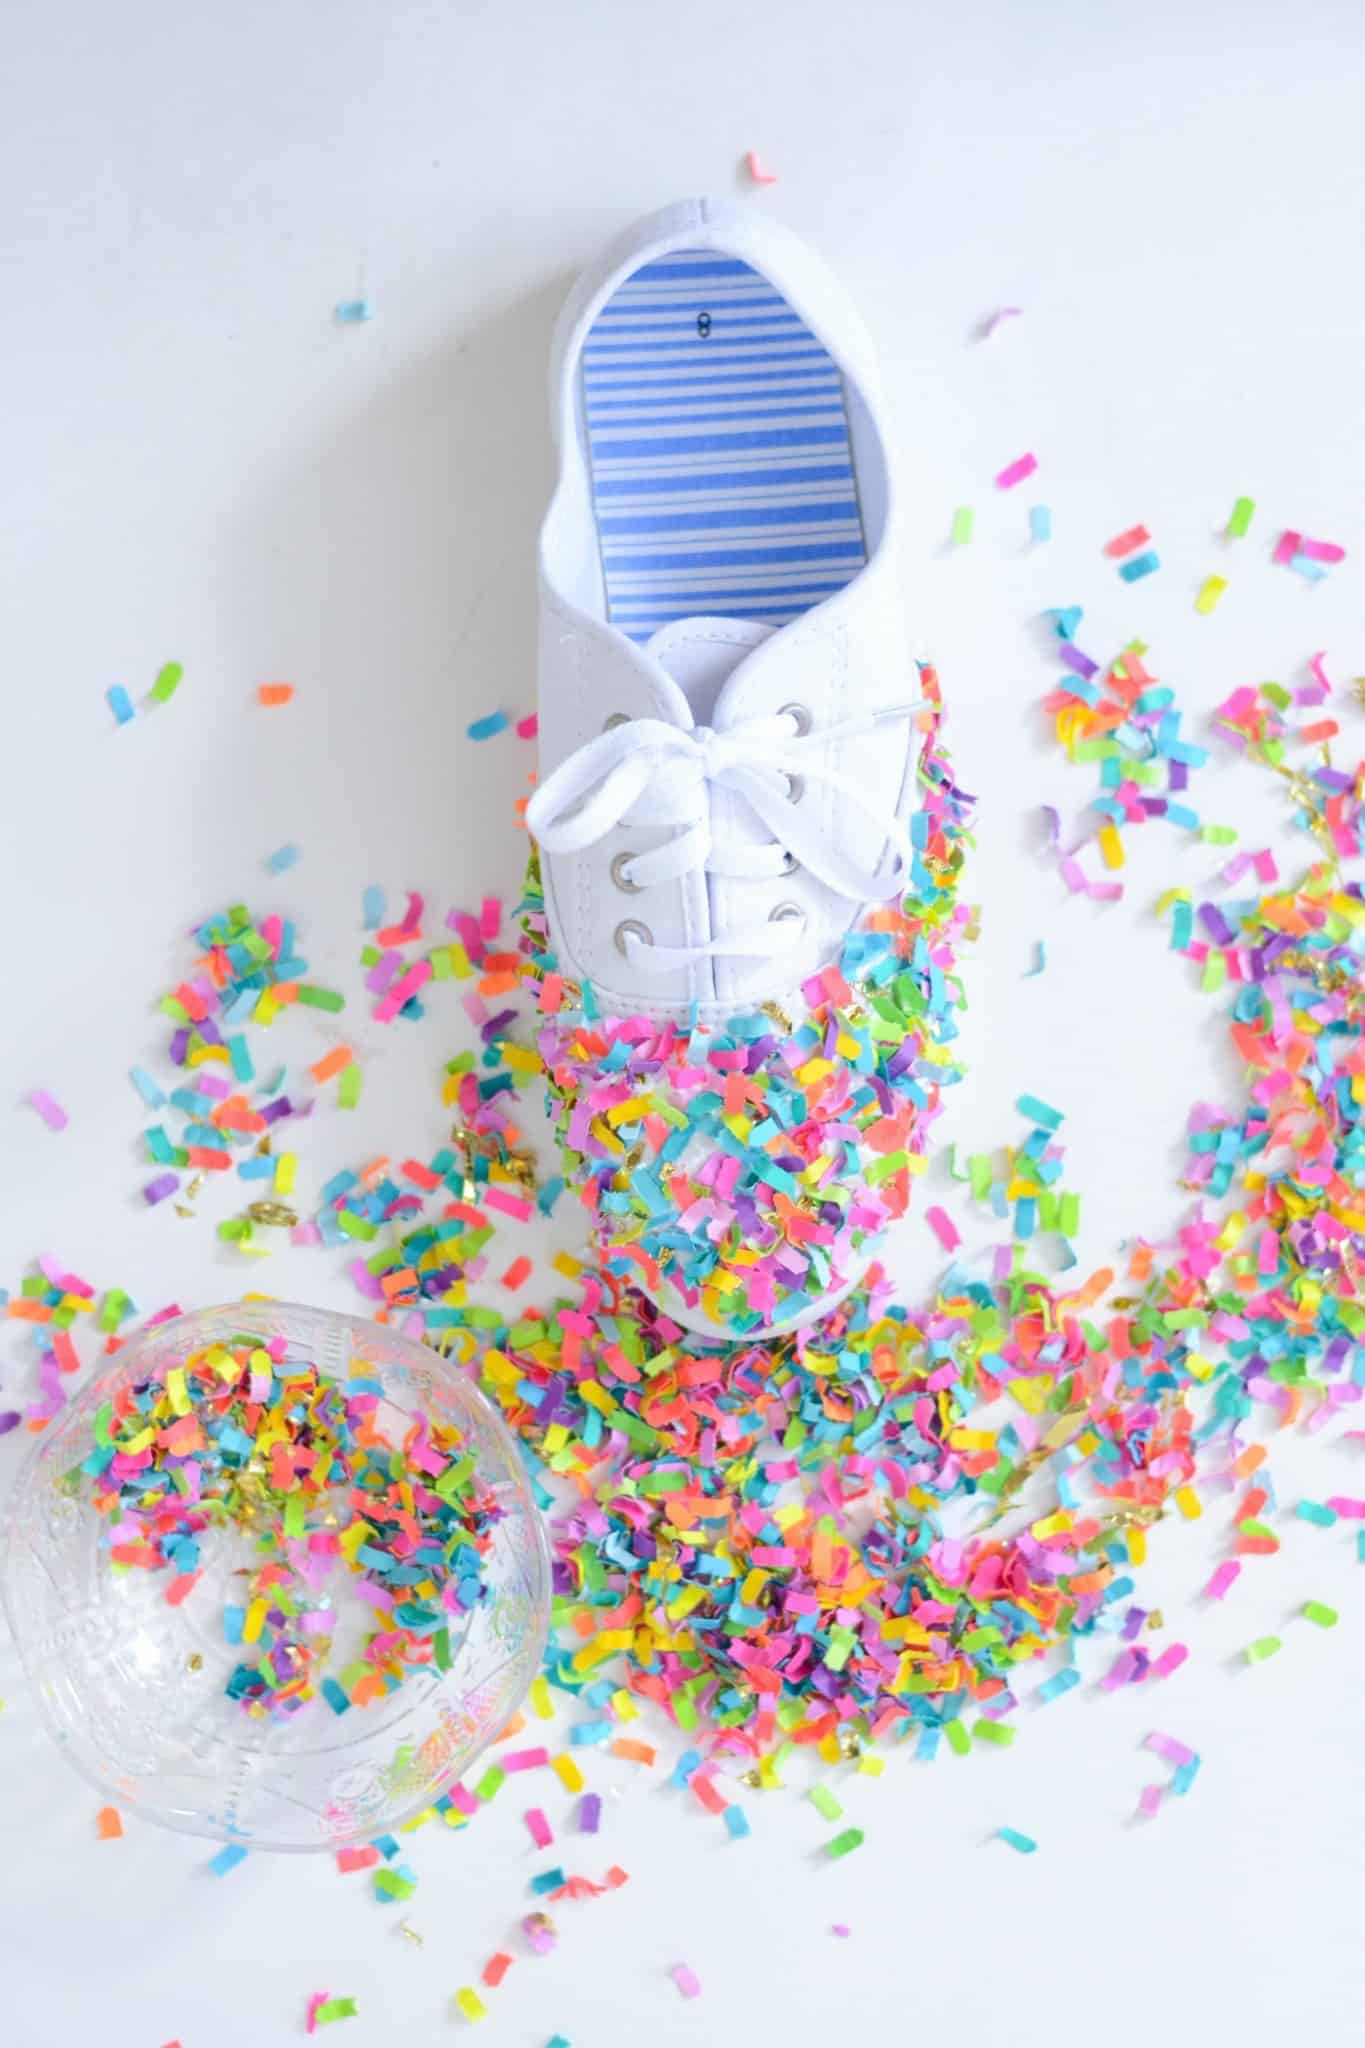 Colorful confetti pressed onto the toe of a white shoe